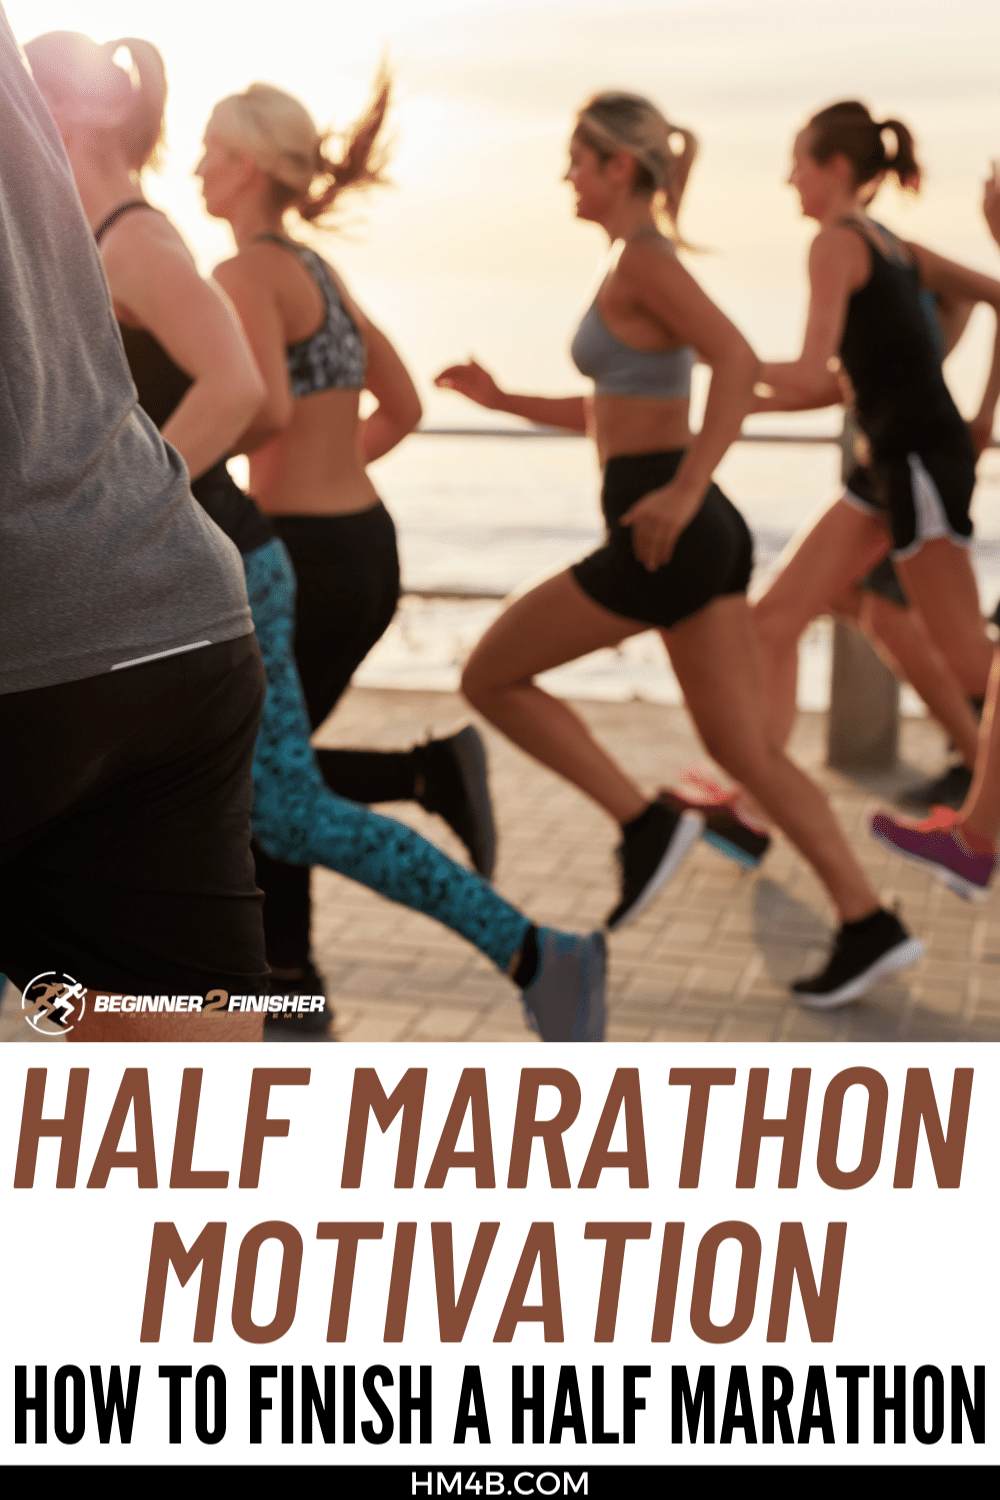 Half Marathon Motivation - How to finish a half marathon